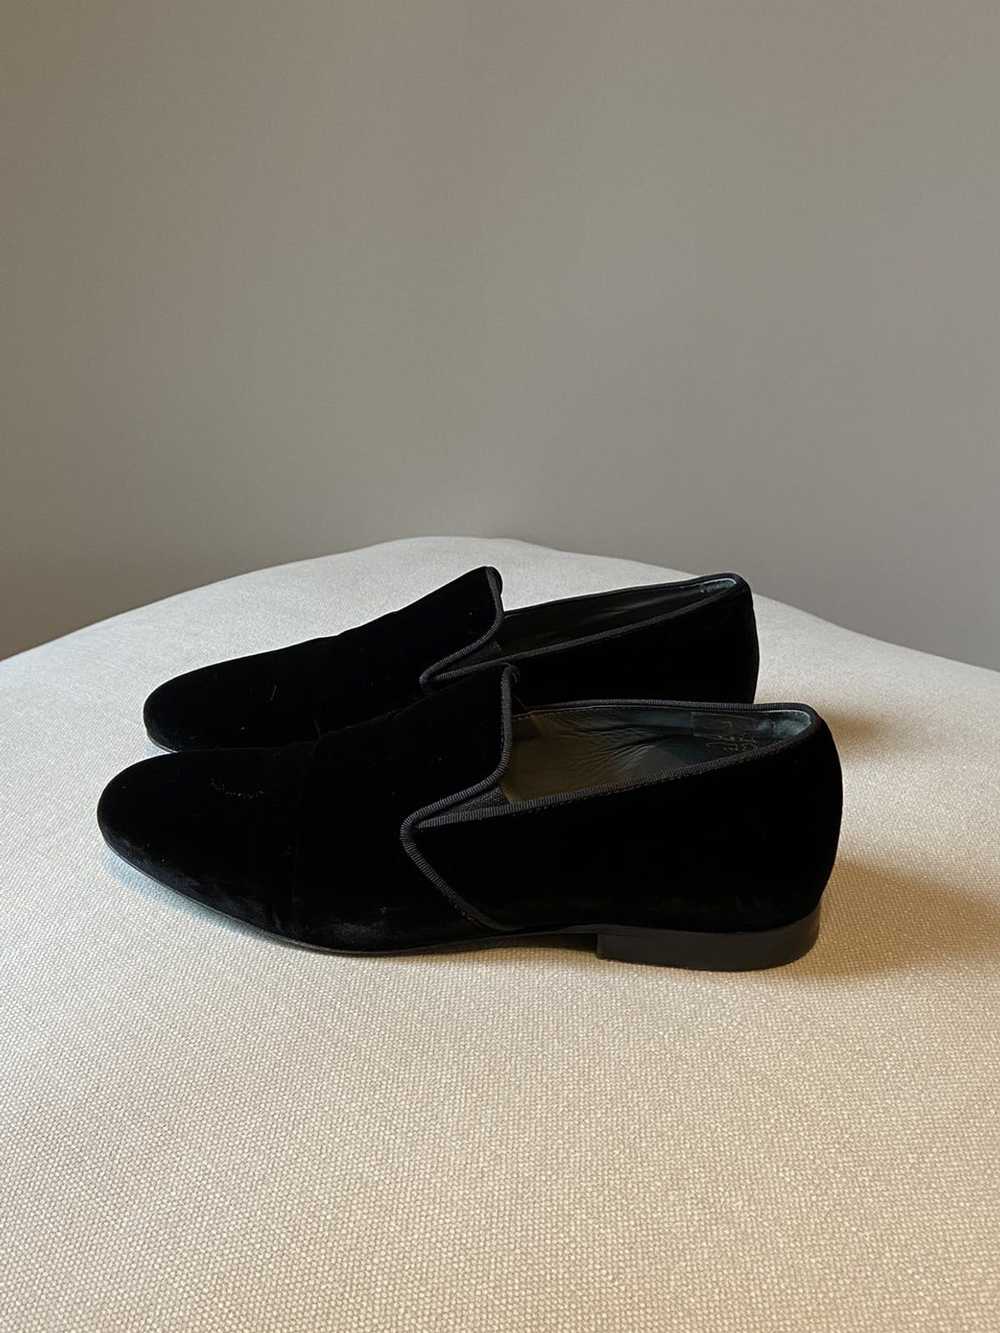 Lanvin Lanvin velvet black formal shoes - image 6